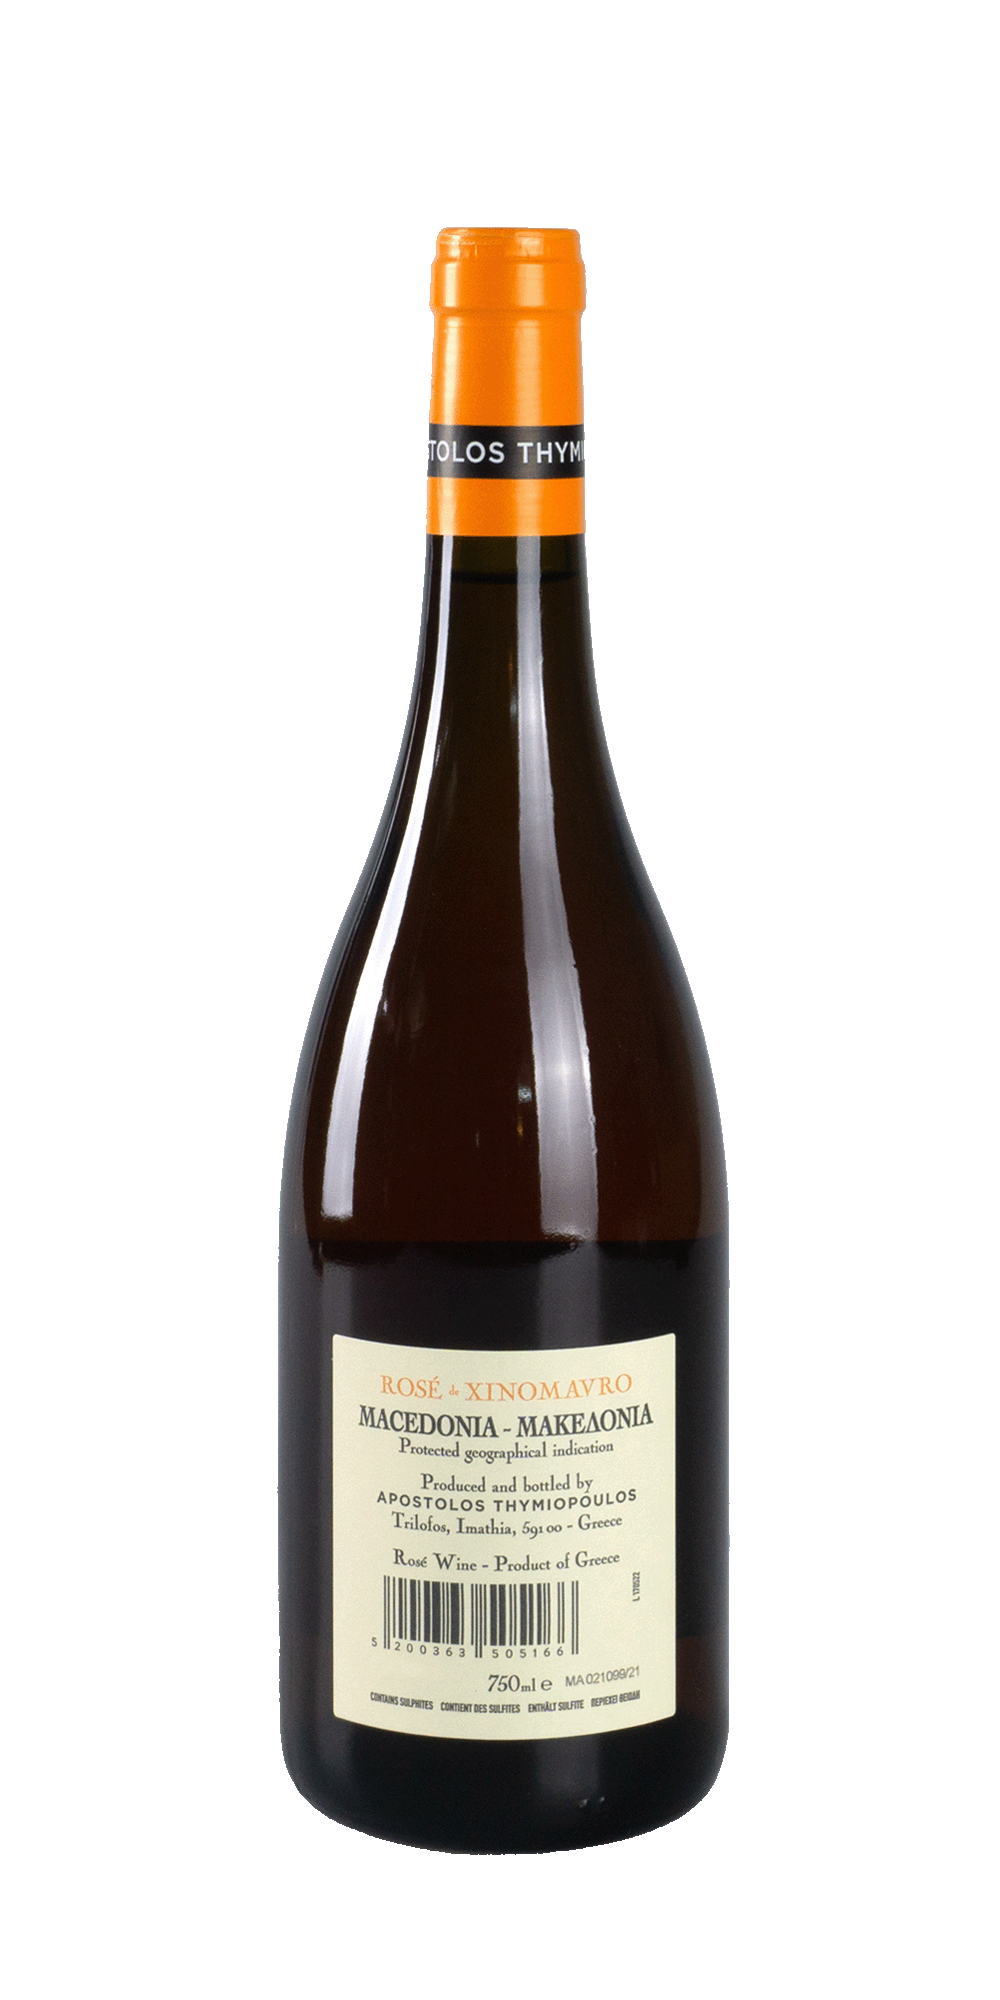 Rosé de Xinomavro 2021  - Thymiopoulos Vineyards